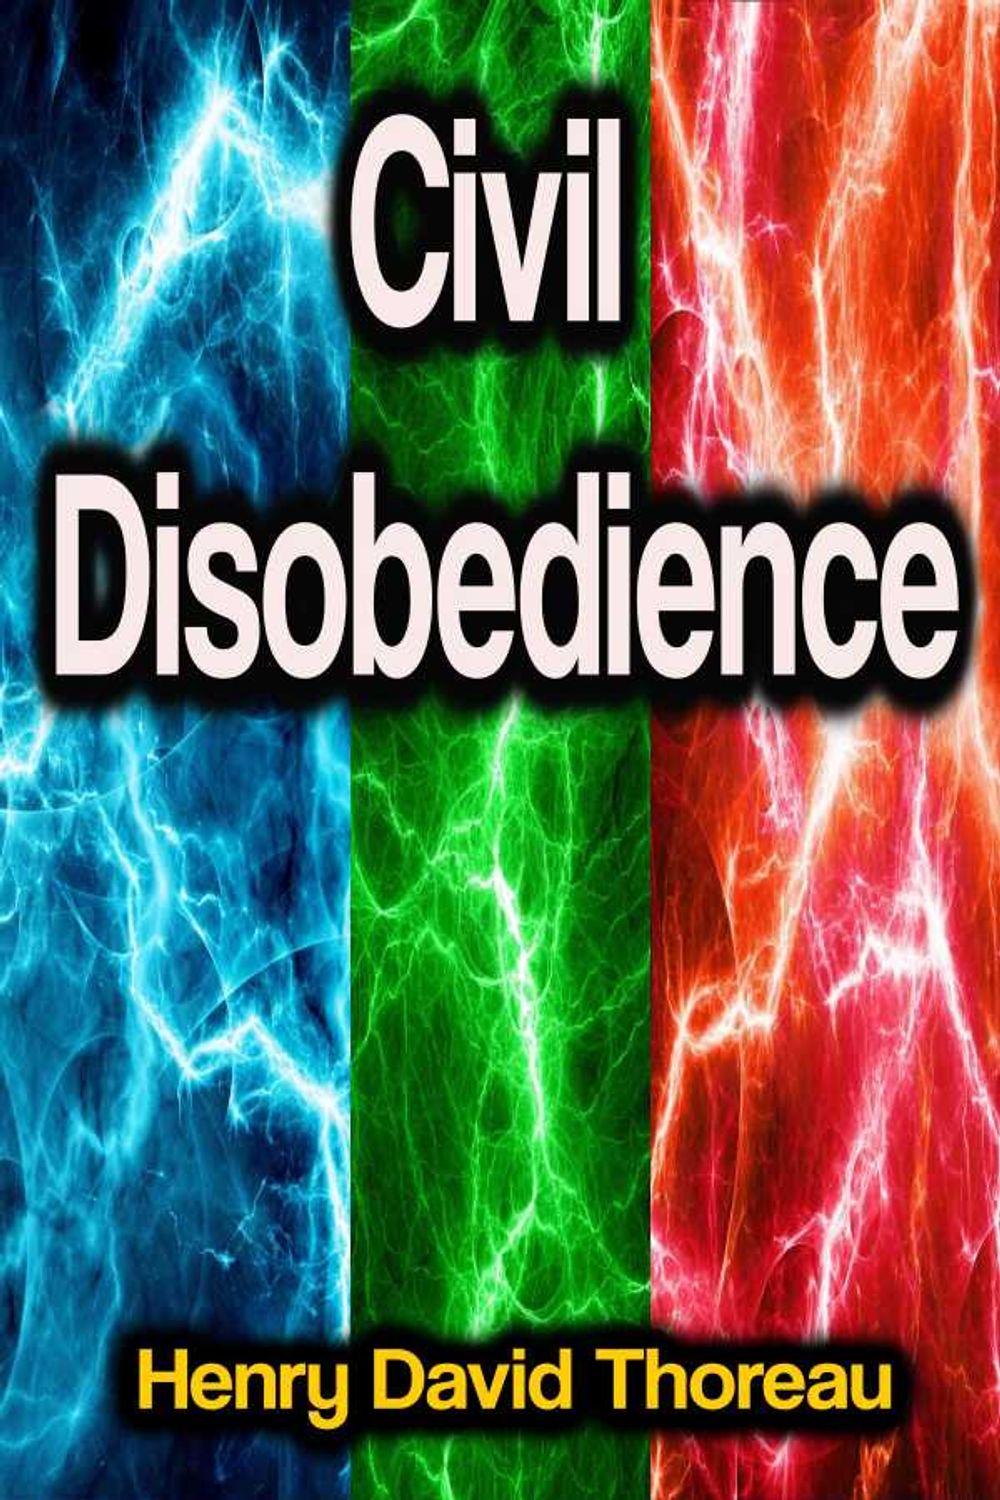 bw-civil-disobedience-phoemixx-classics-ebooks-9783986475826